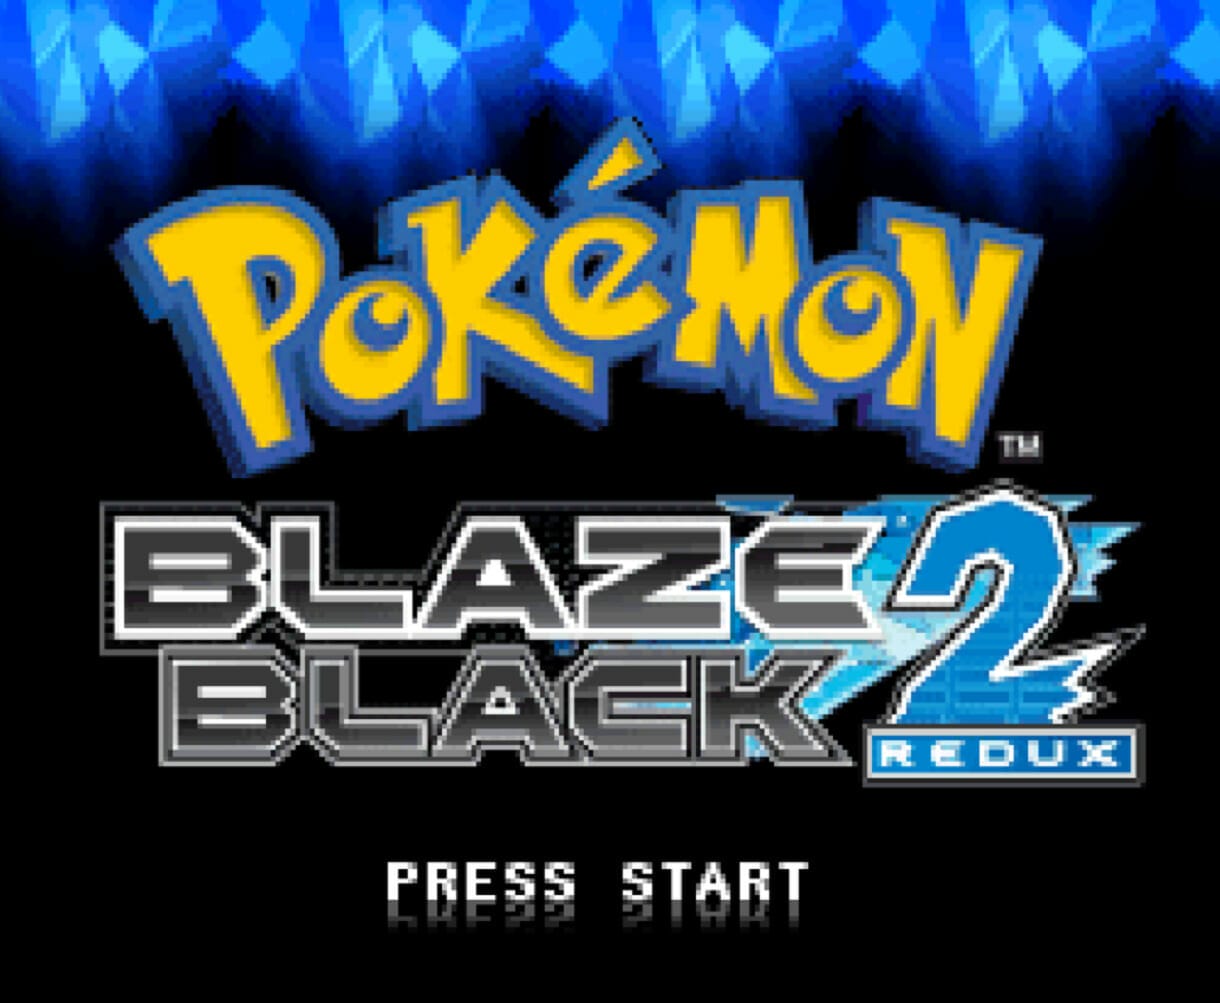 Pokémon Blaze Black & Pokémon Volt White ROM Download - Nintendo DS(NDS)